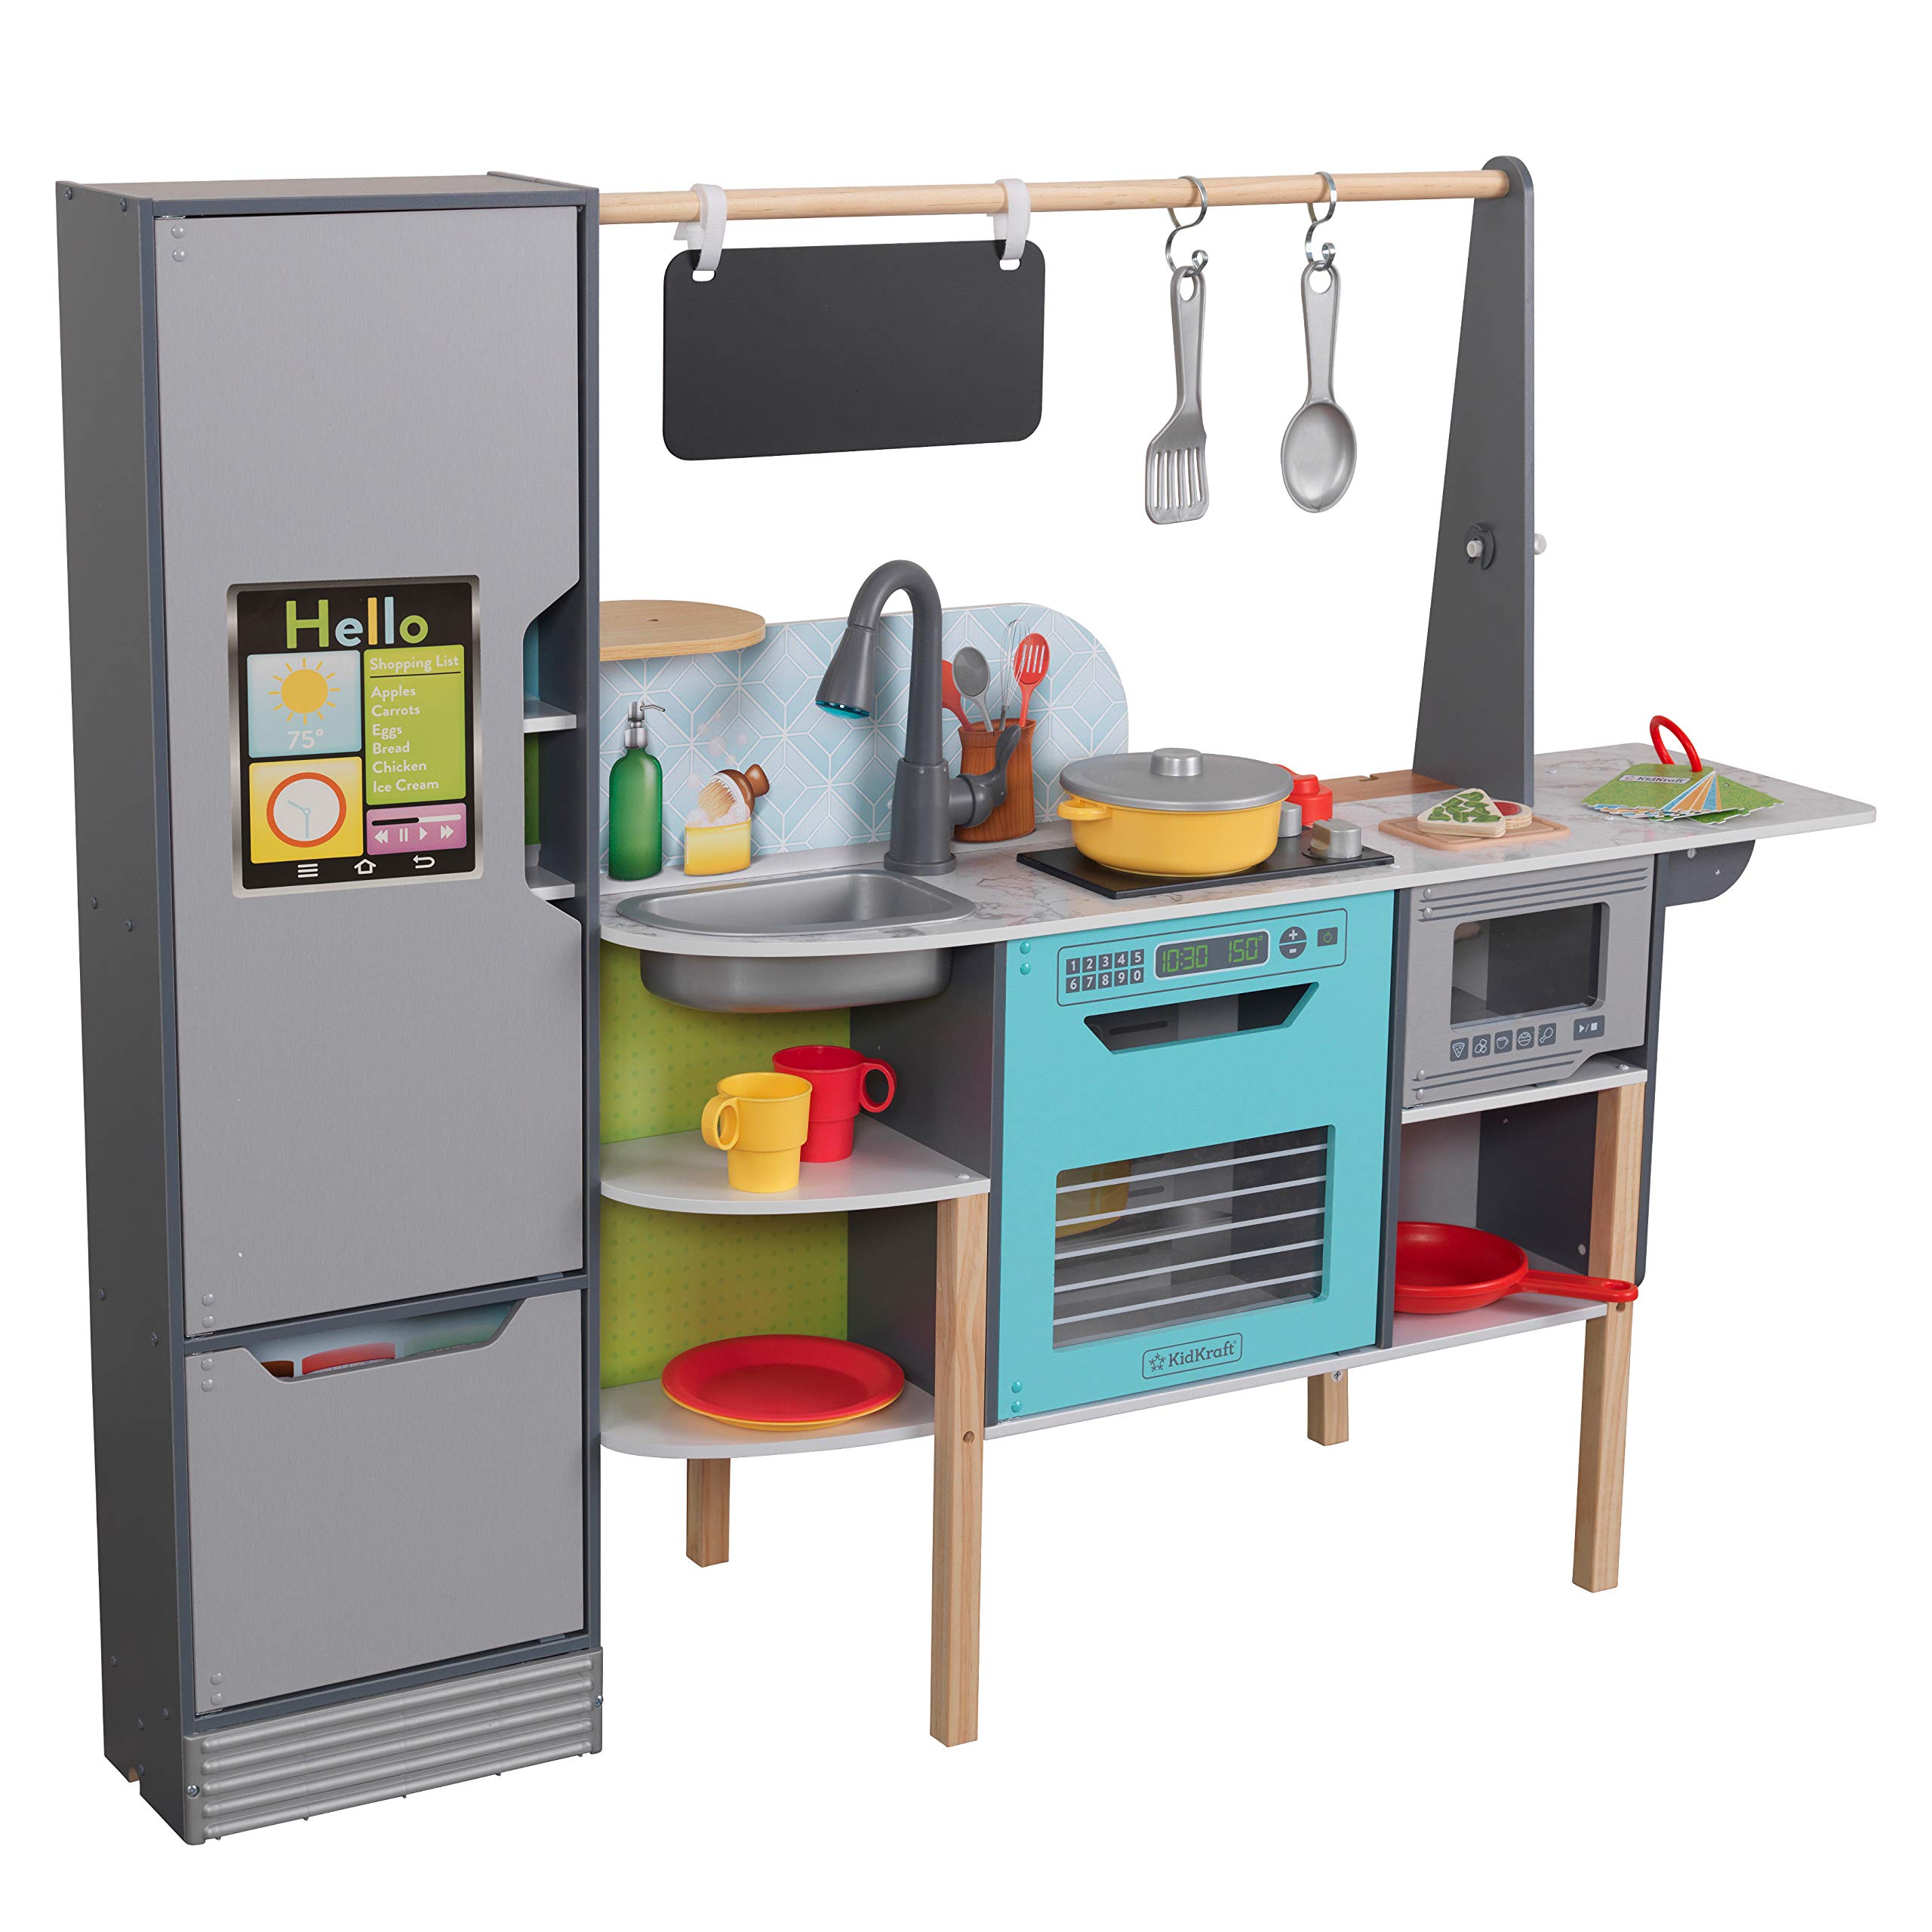 KidKraft Alexa-Enabled Interactive 2-in-1 Wooden Kitchen & Market w/ Foods, Games & 105 Accessories $79.94 + Free Shipping